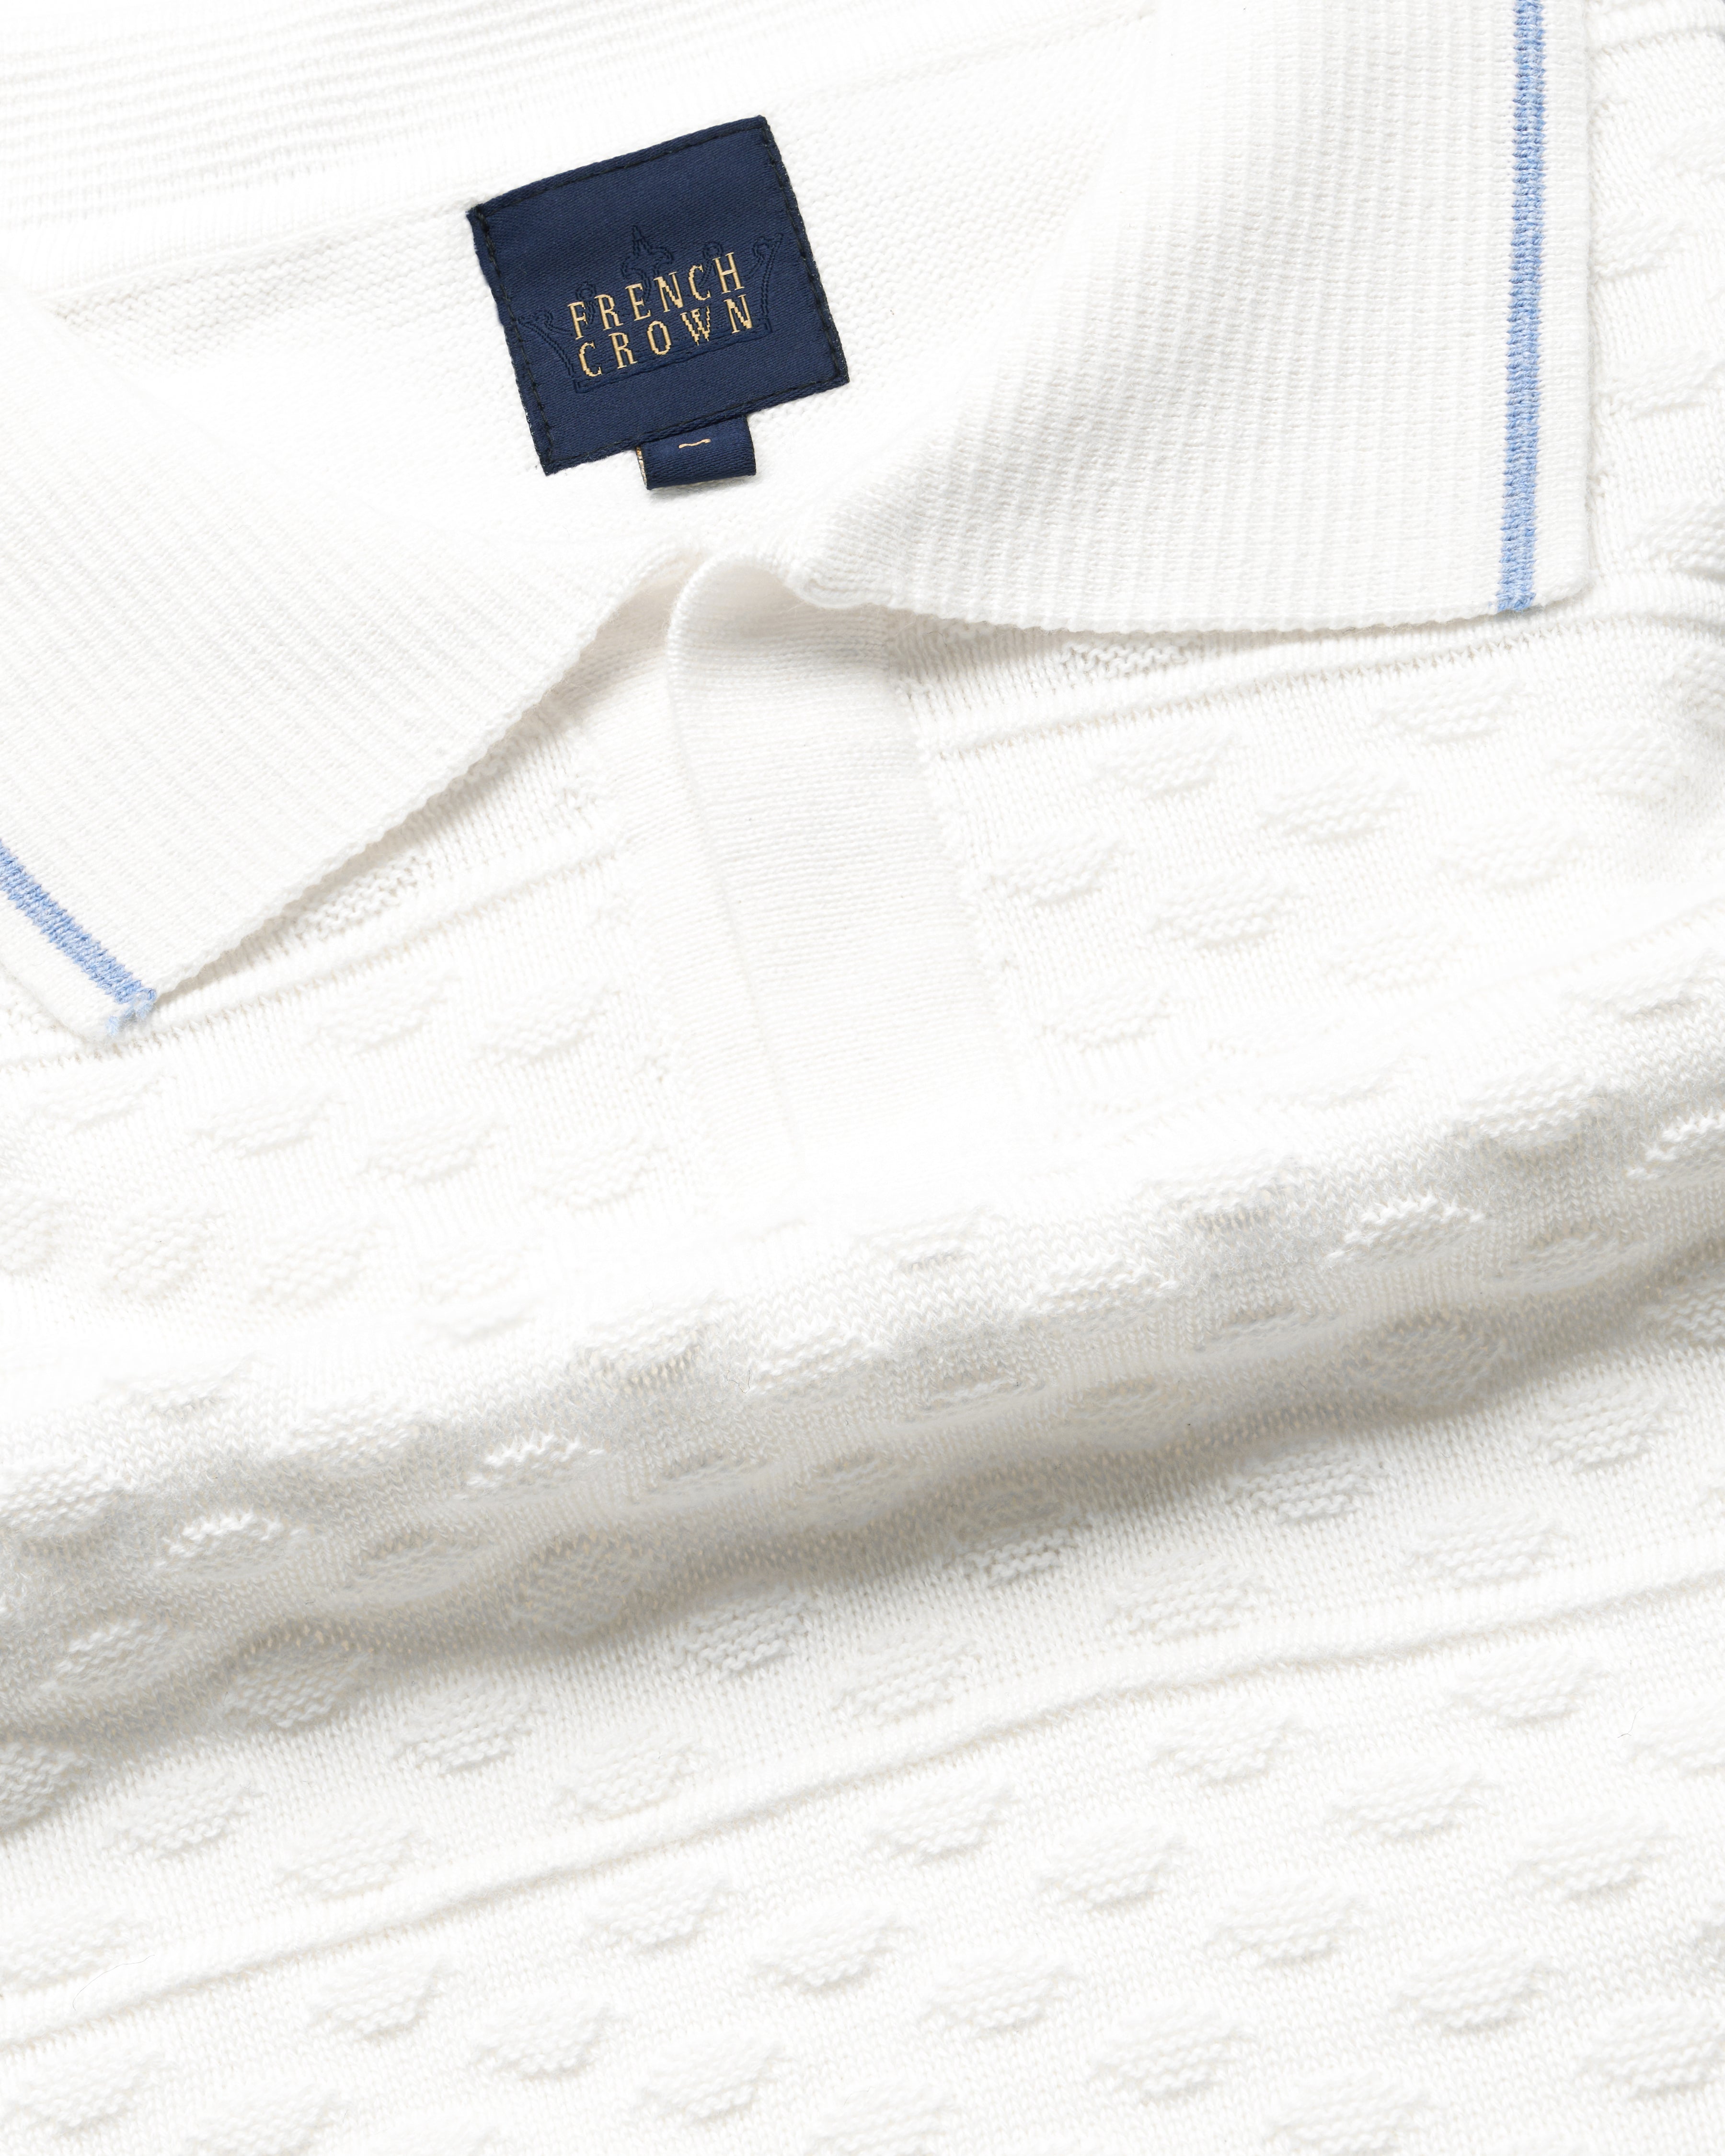 Bright White Jacquard Textured Flat-Knit Premium Cotton Polo TS873-S, TS873-M, TS873-L, TS873-XL, TS873-XXL